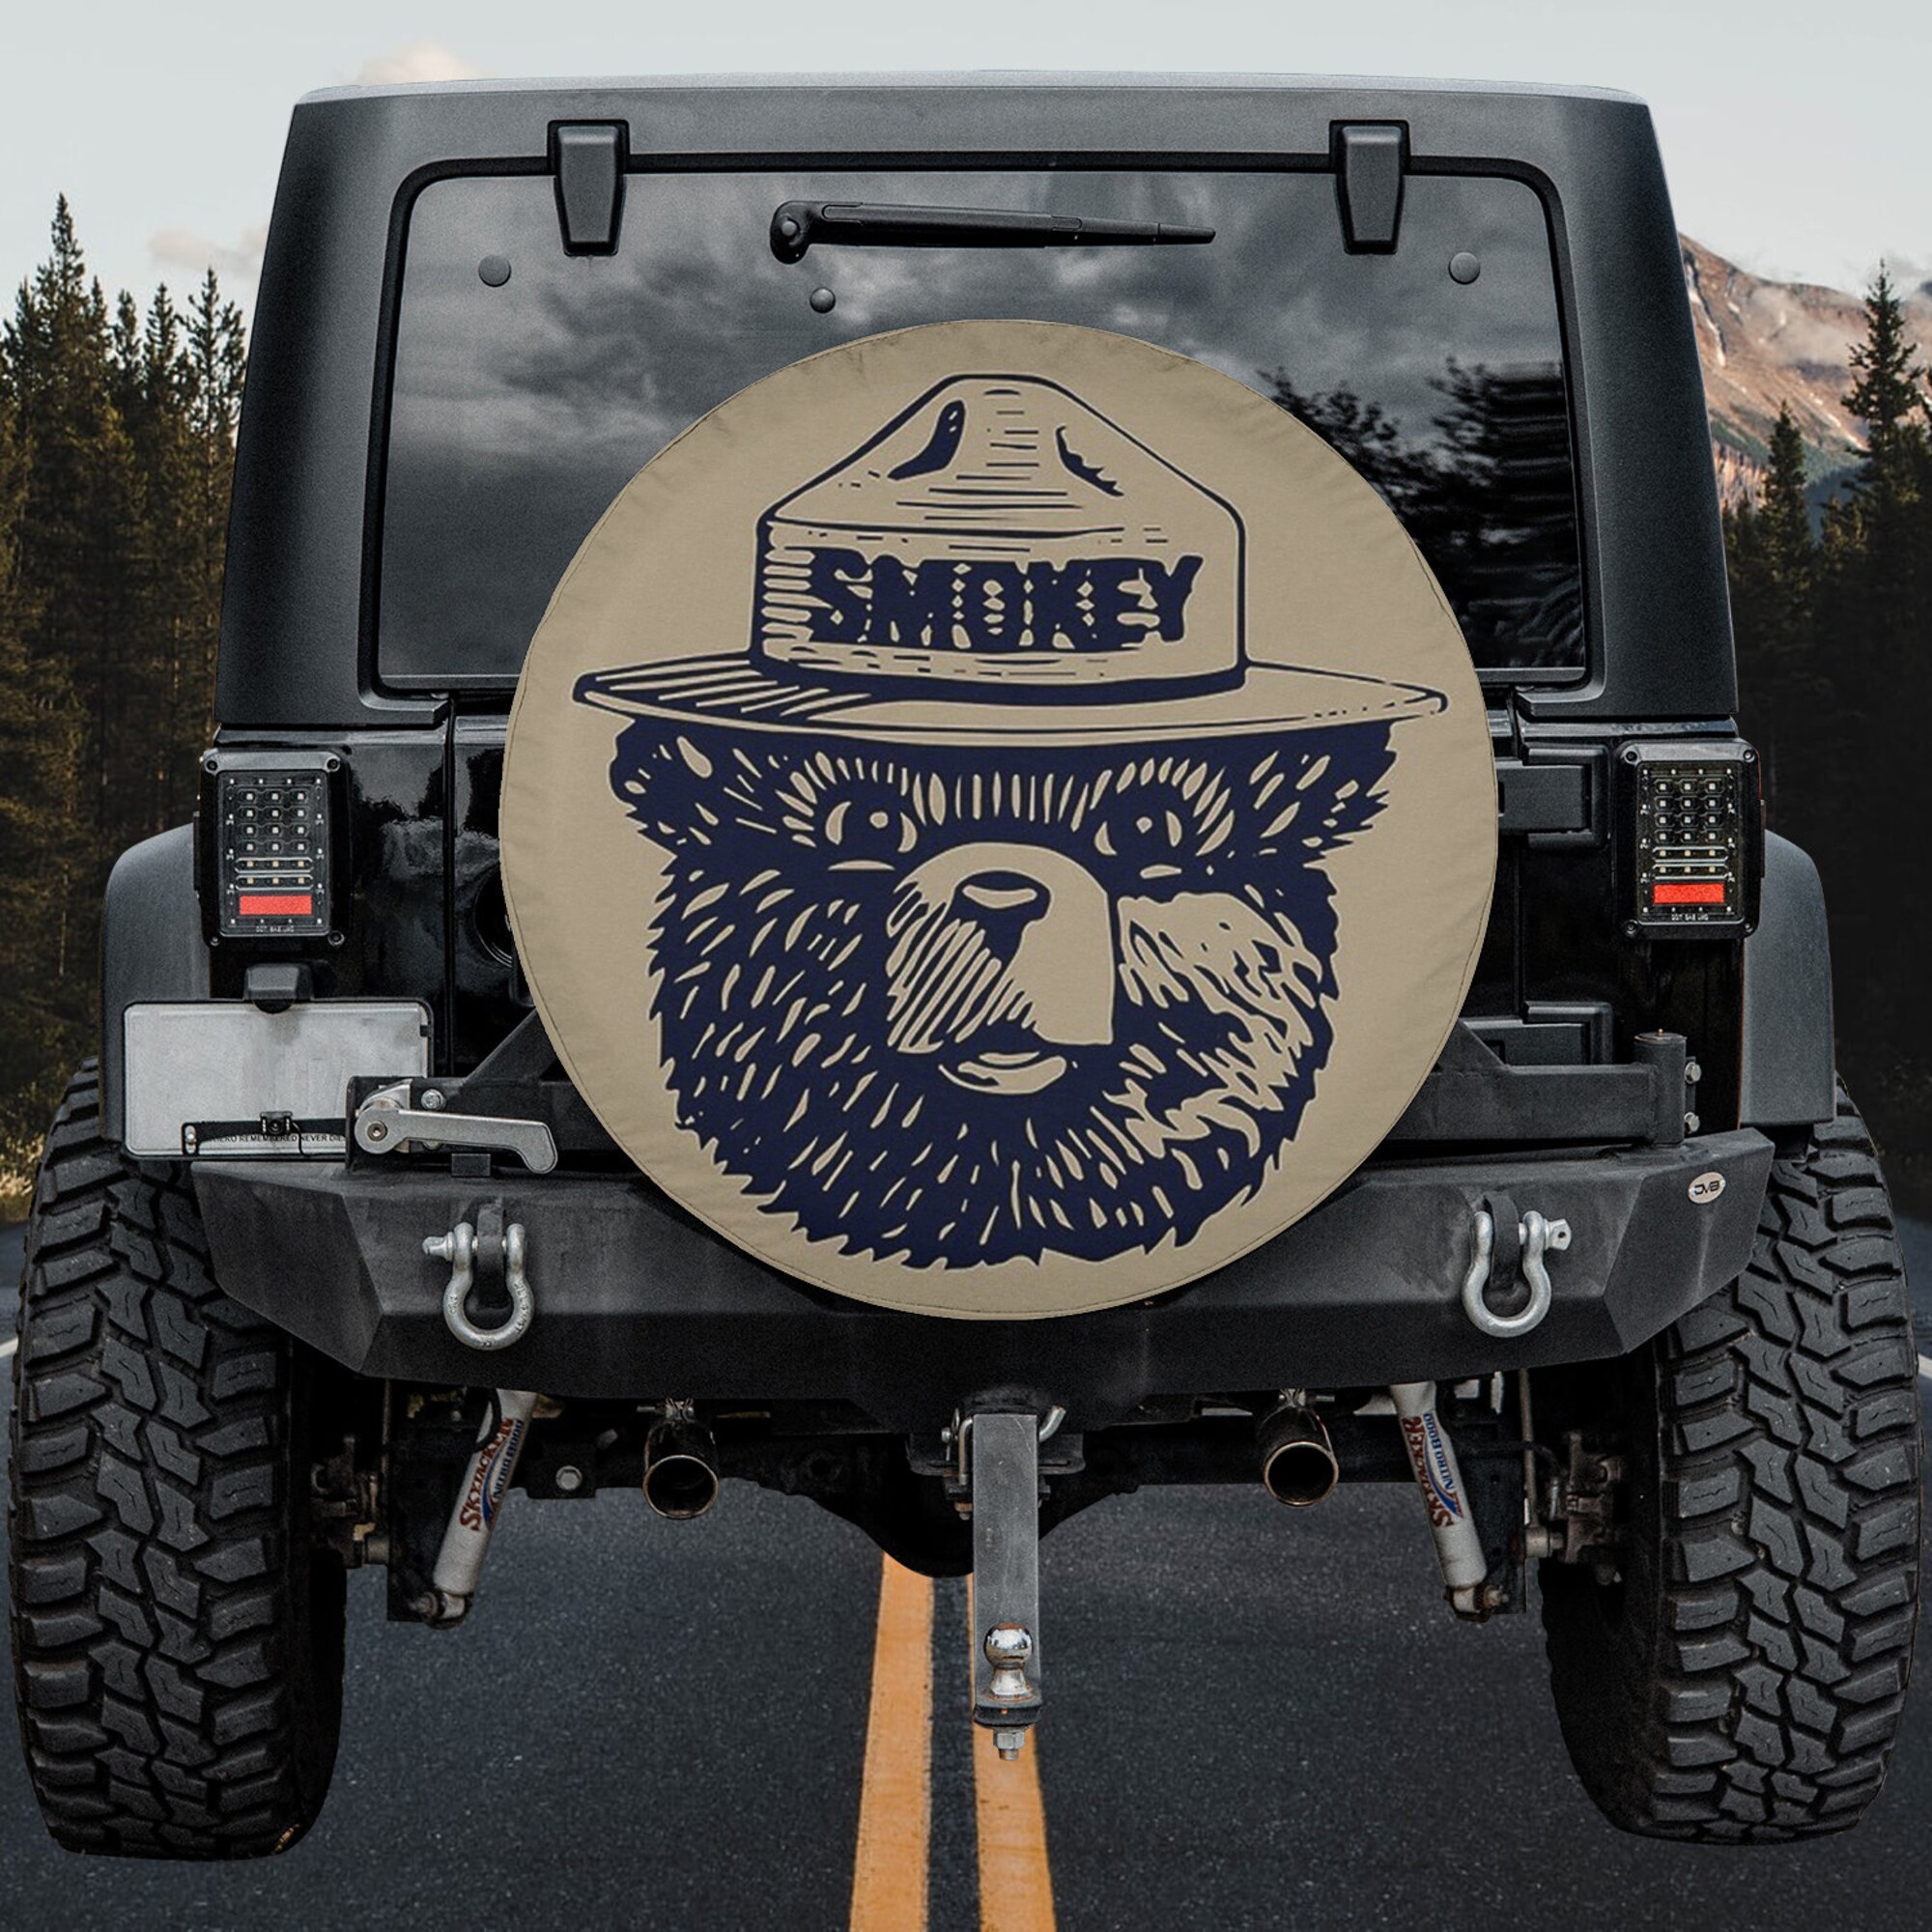 Camping Smockey Spare Tire Cover, Retro Monkey Tire Cover